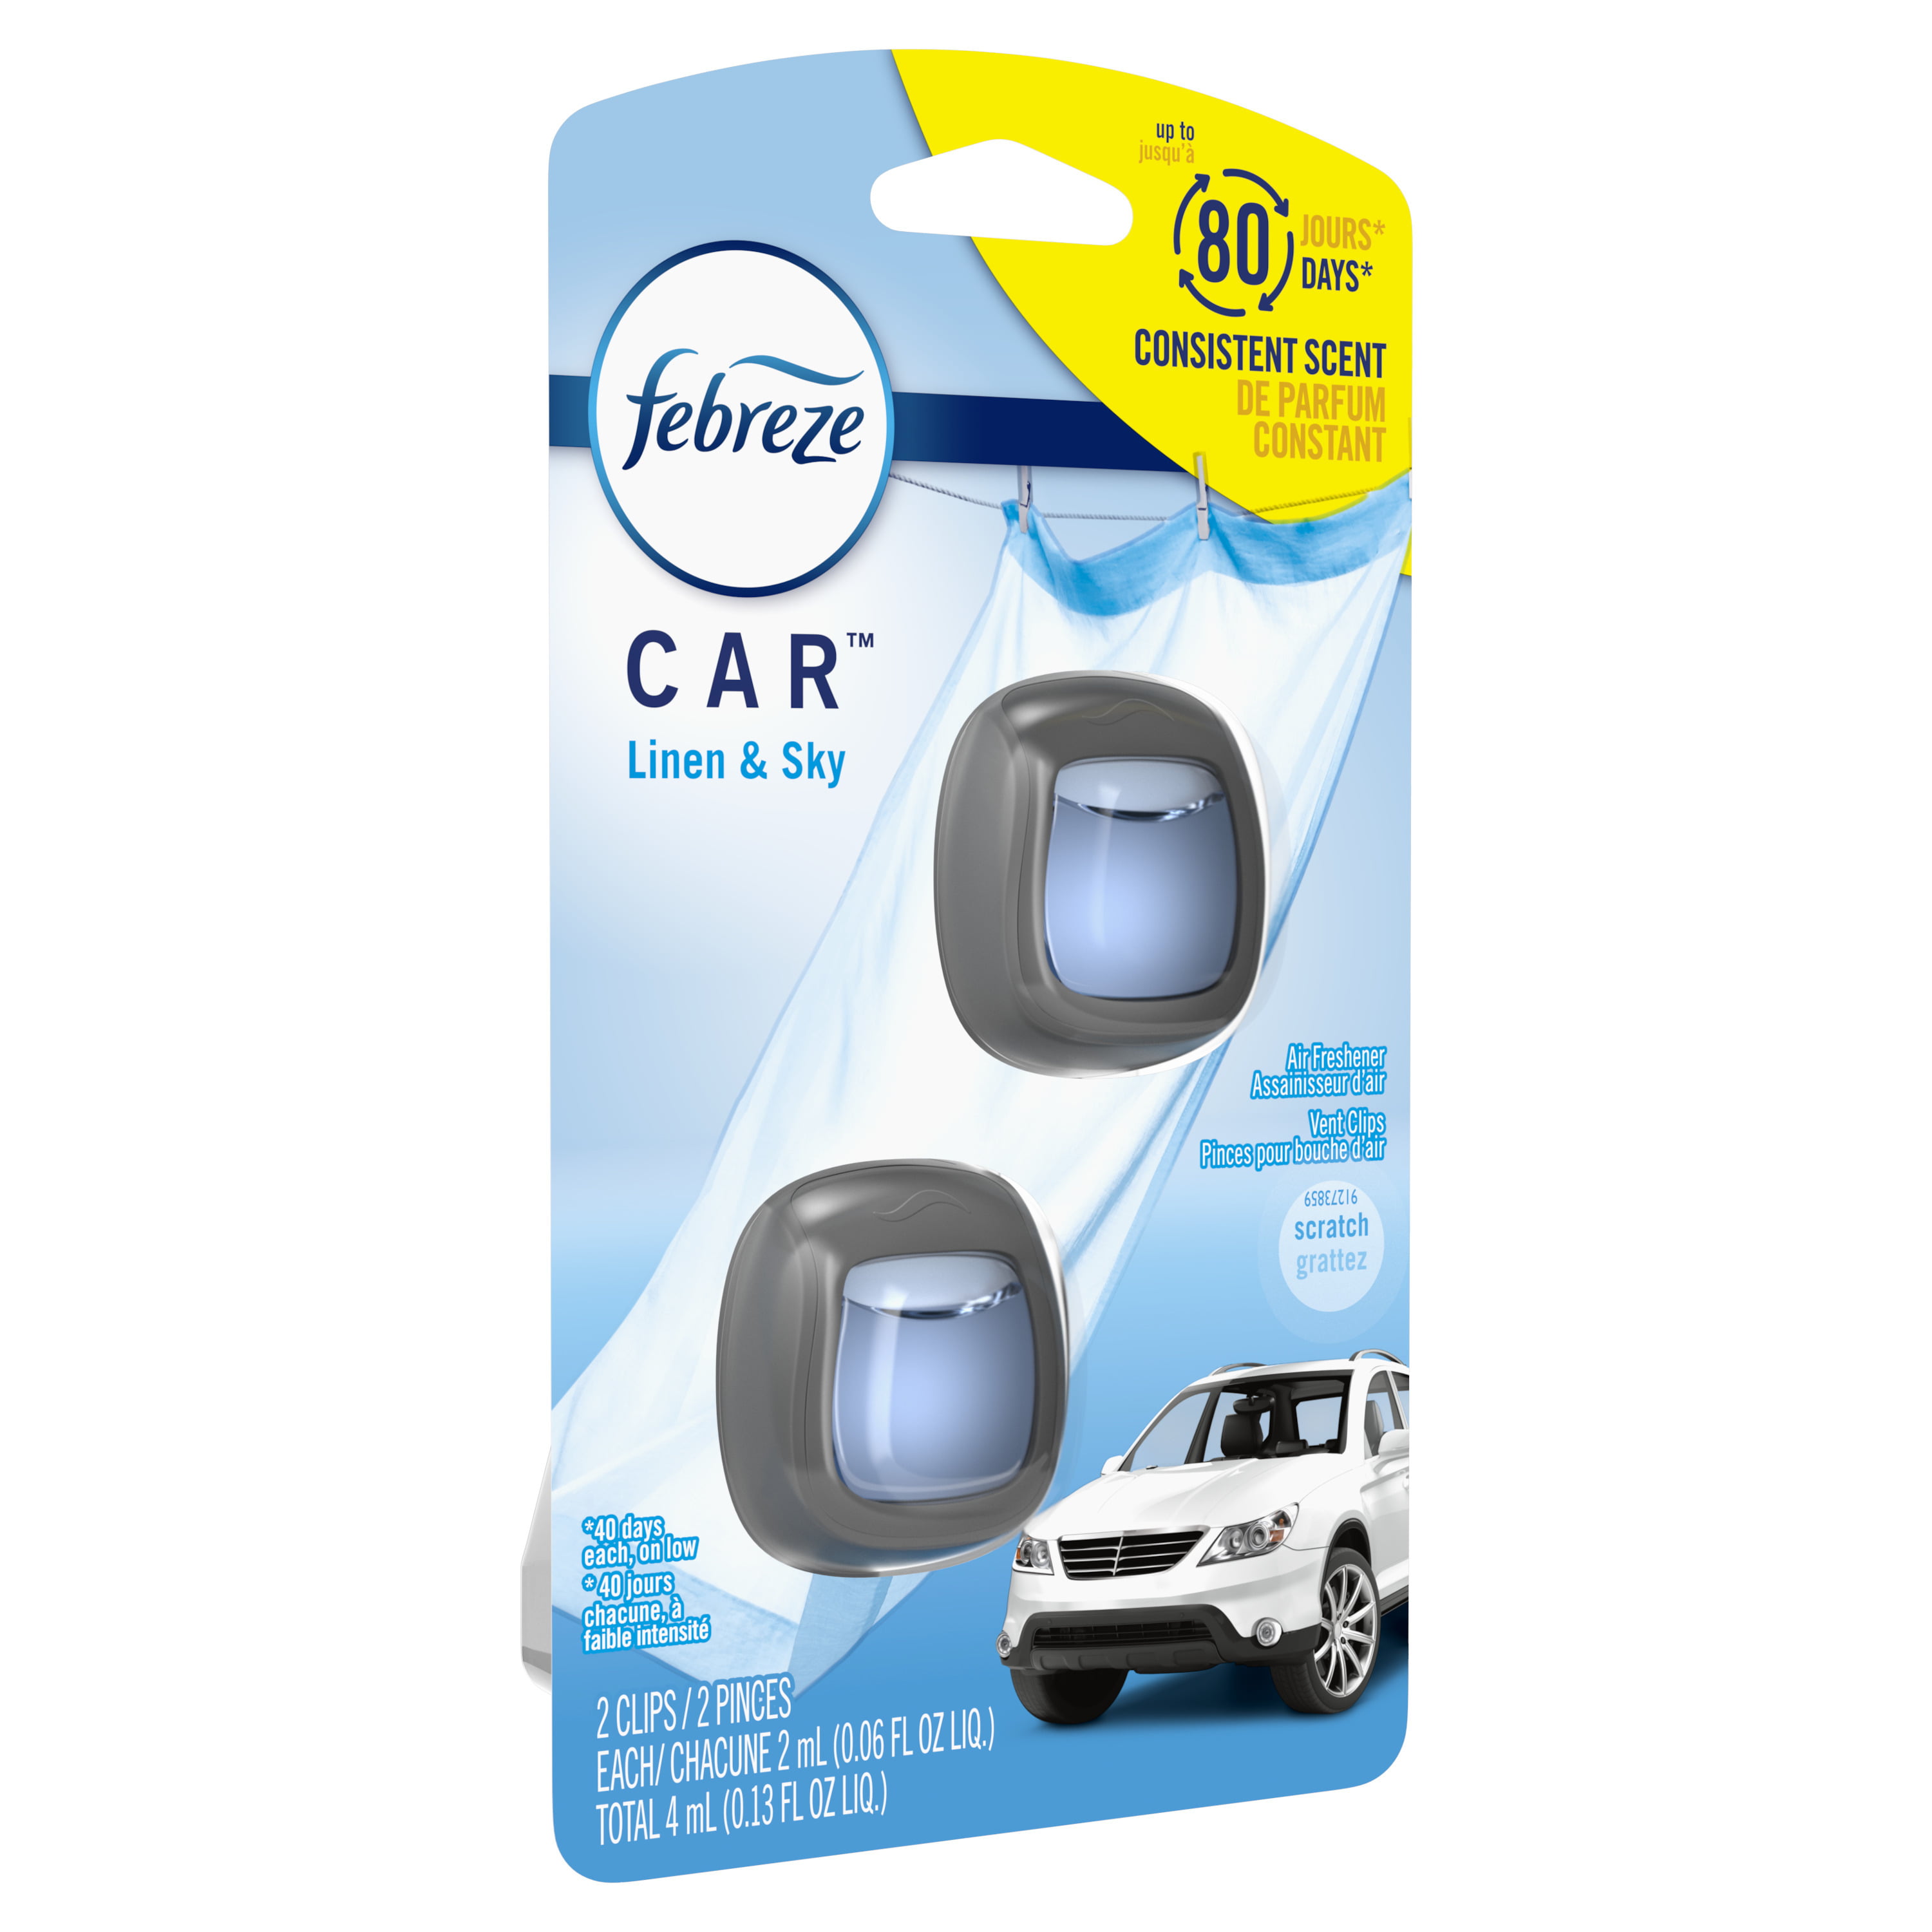 Car Air Freshener Vent Clip Kit at Penn State Industries